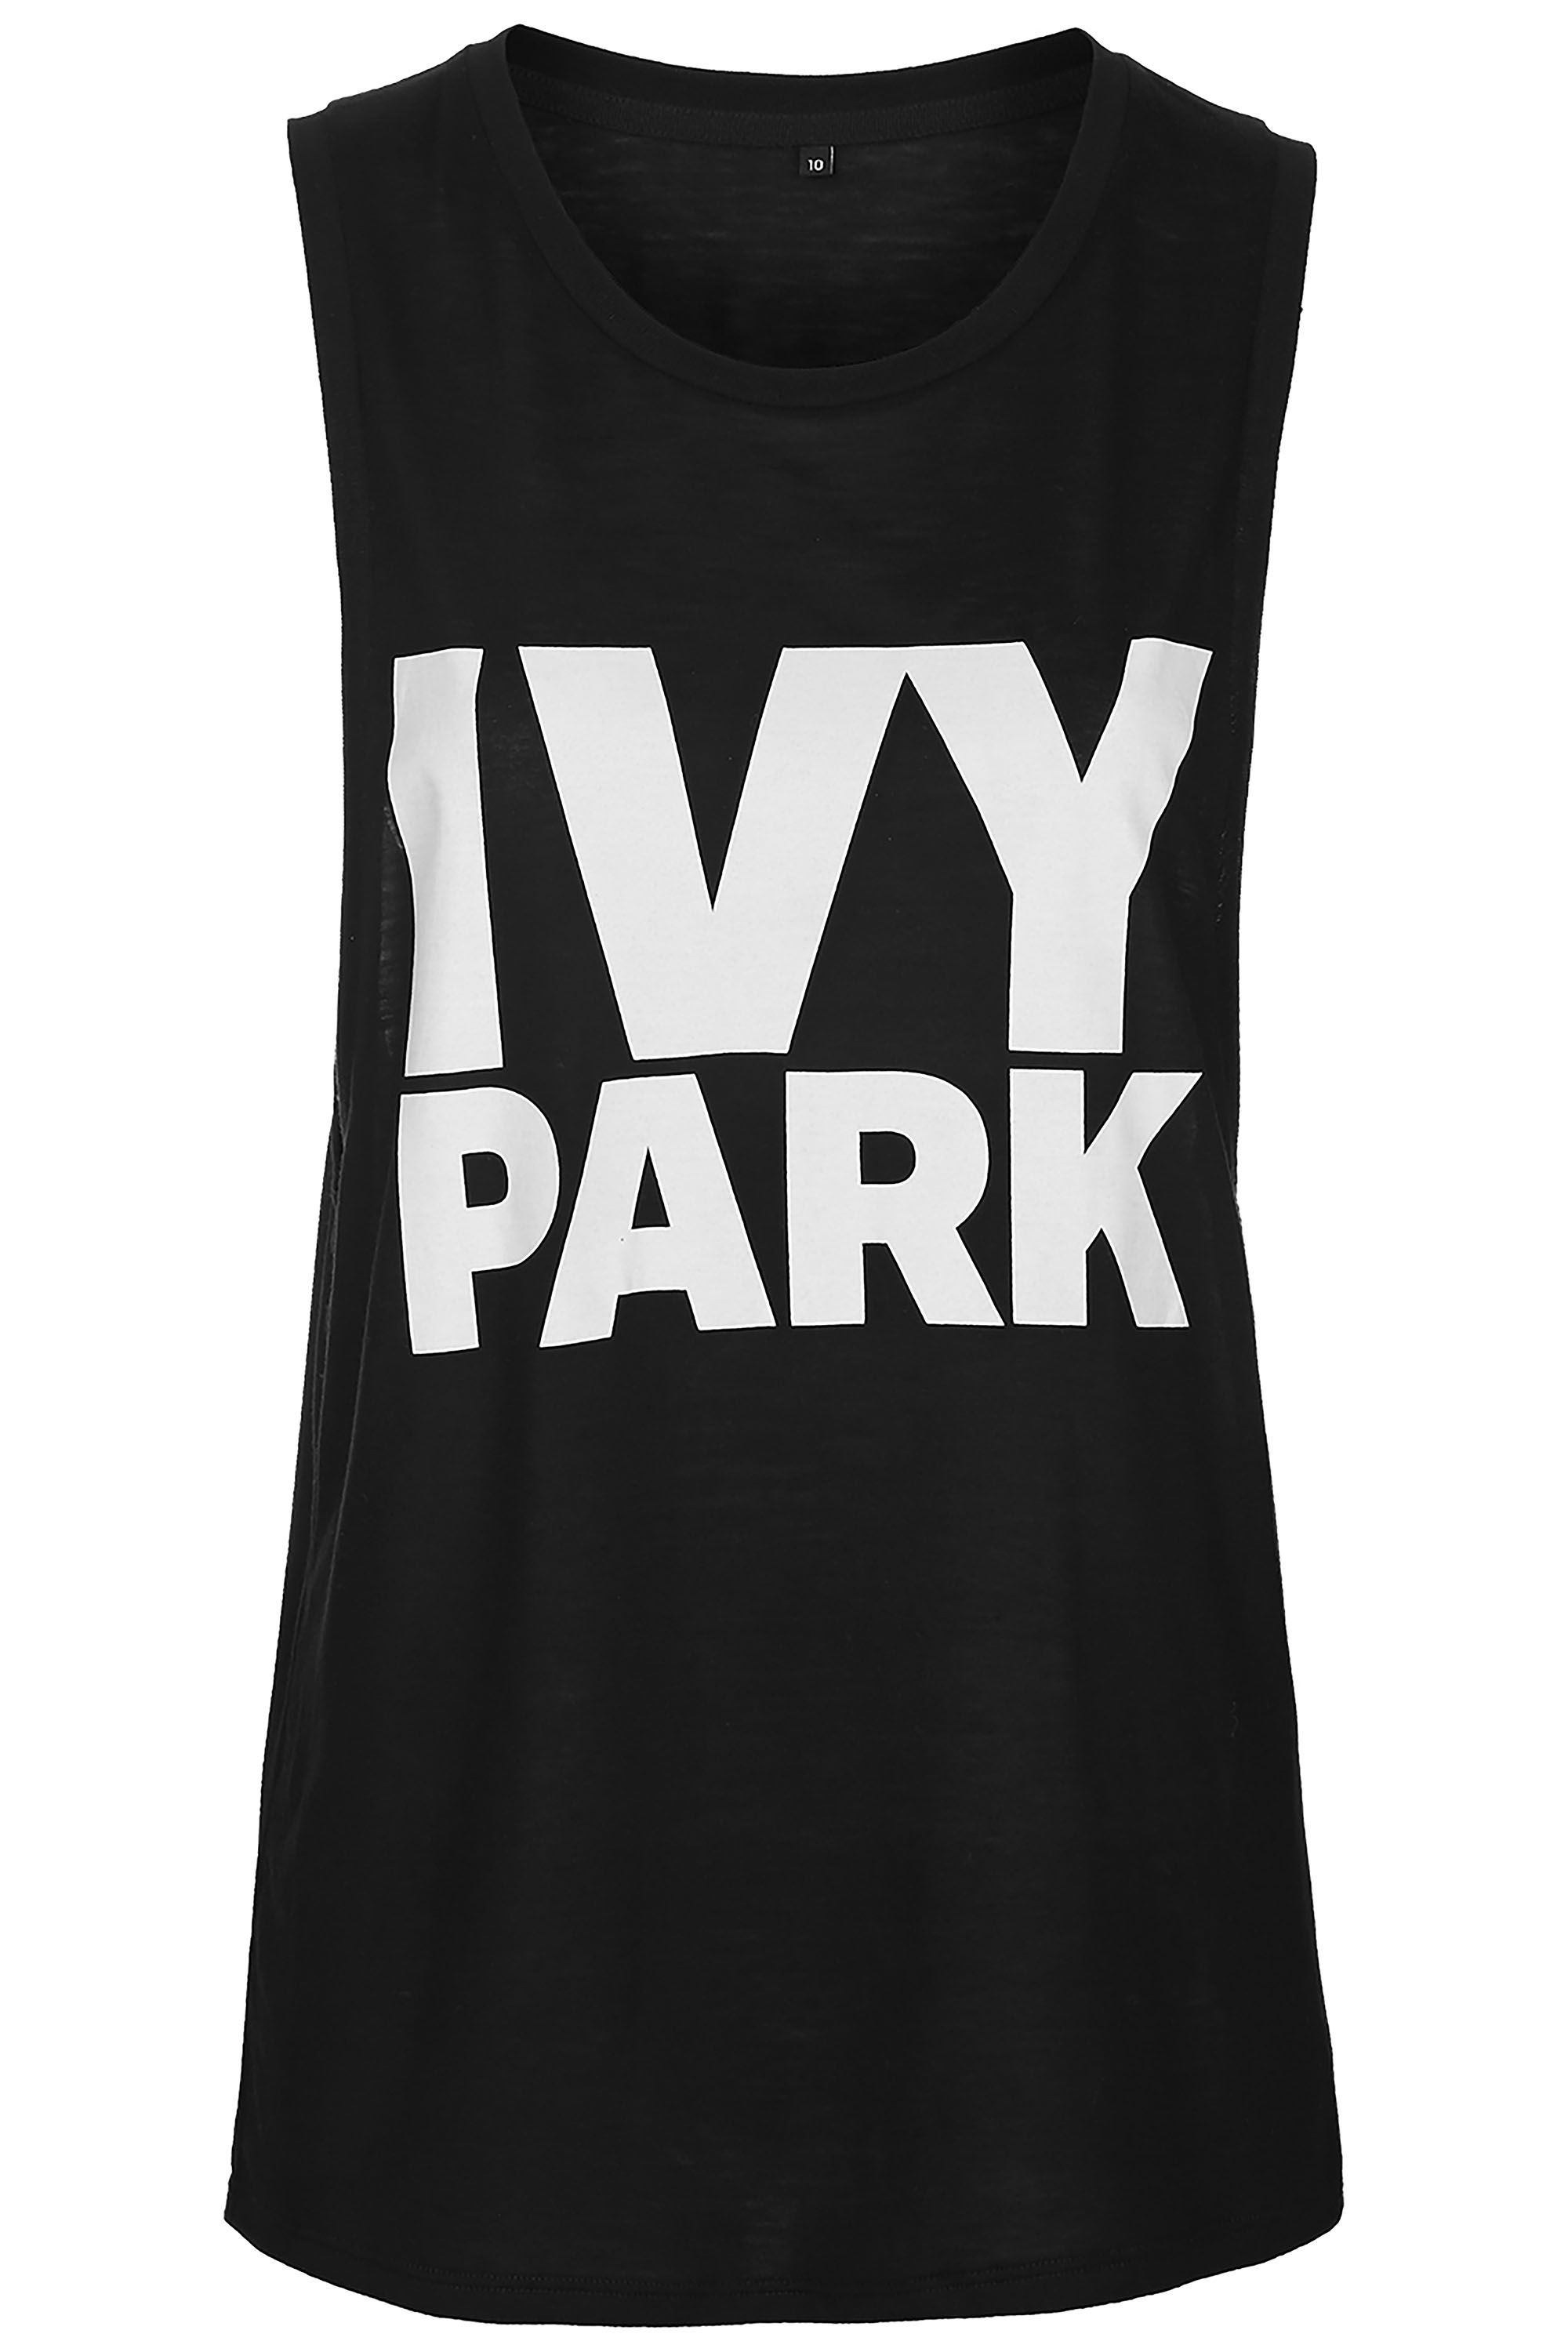 ivy park clothing price